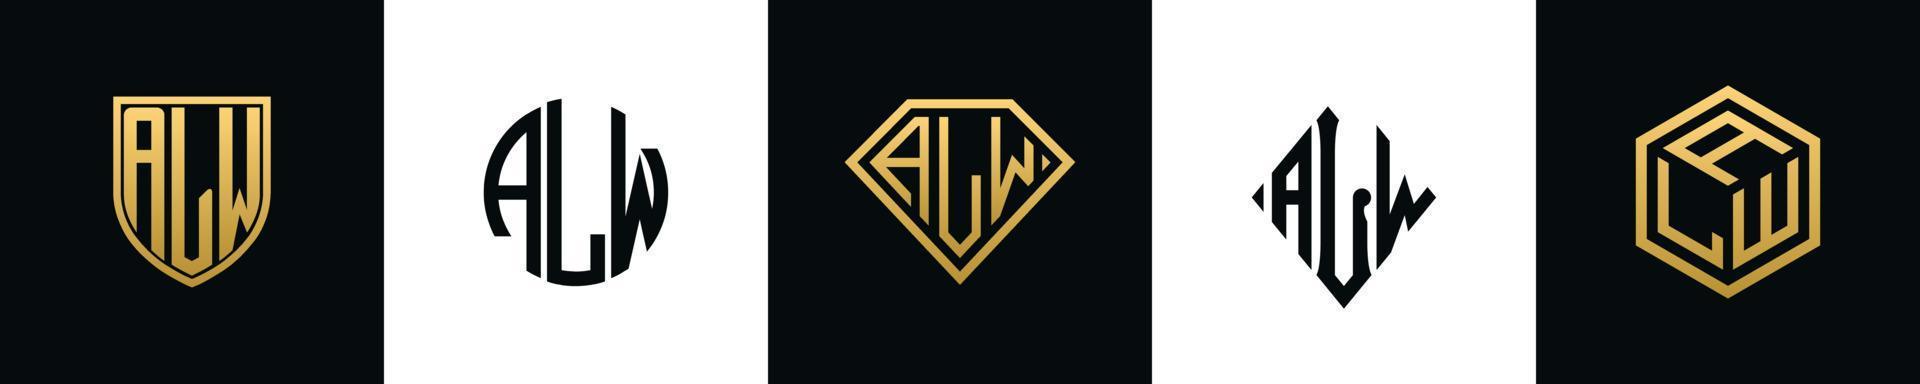 Initial letters ALW logo designs Bundle vector